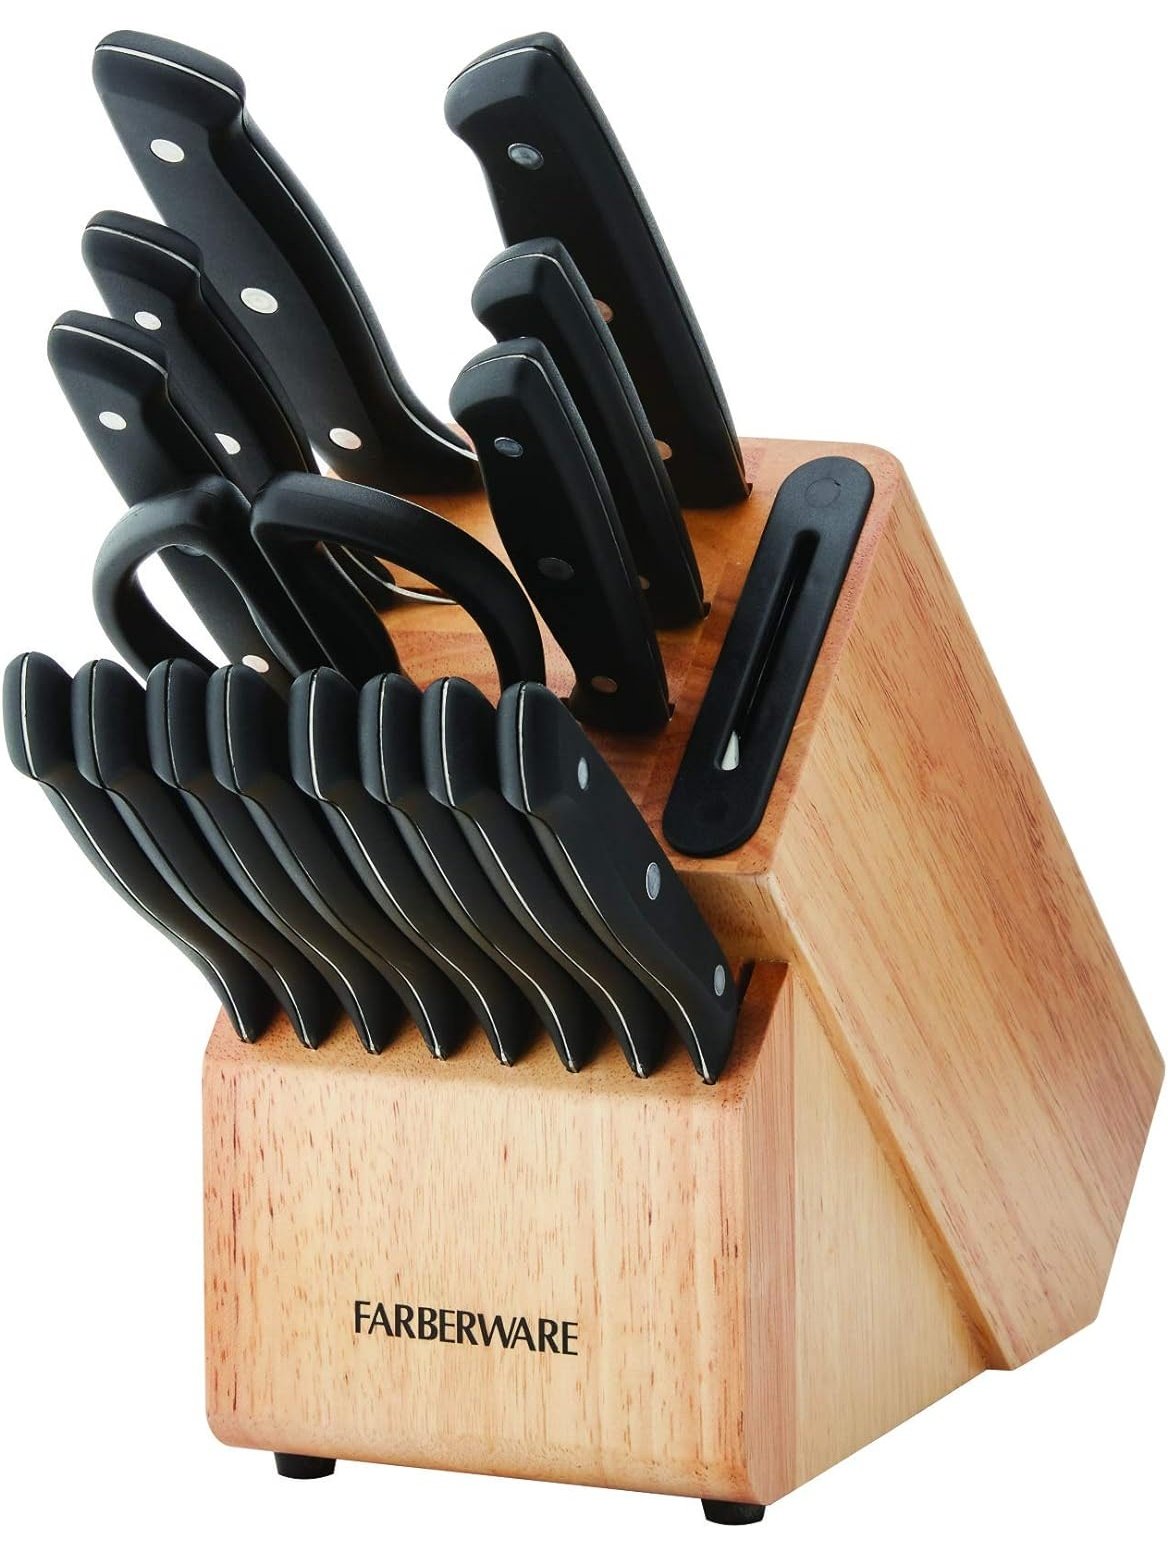 Farberware Edgekeeper 16-Piece Triple Rivet Block Set with Built in Knife Sharpener, Black